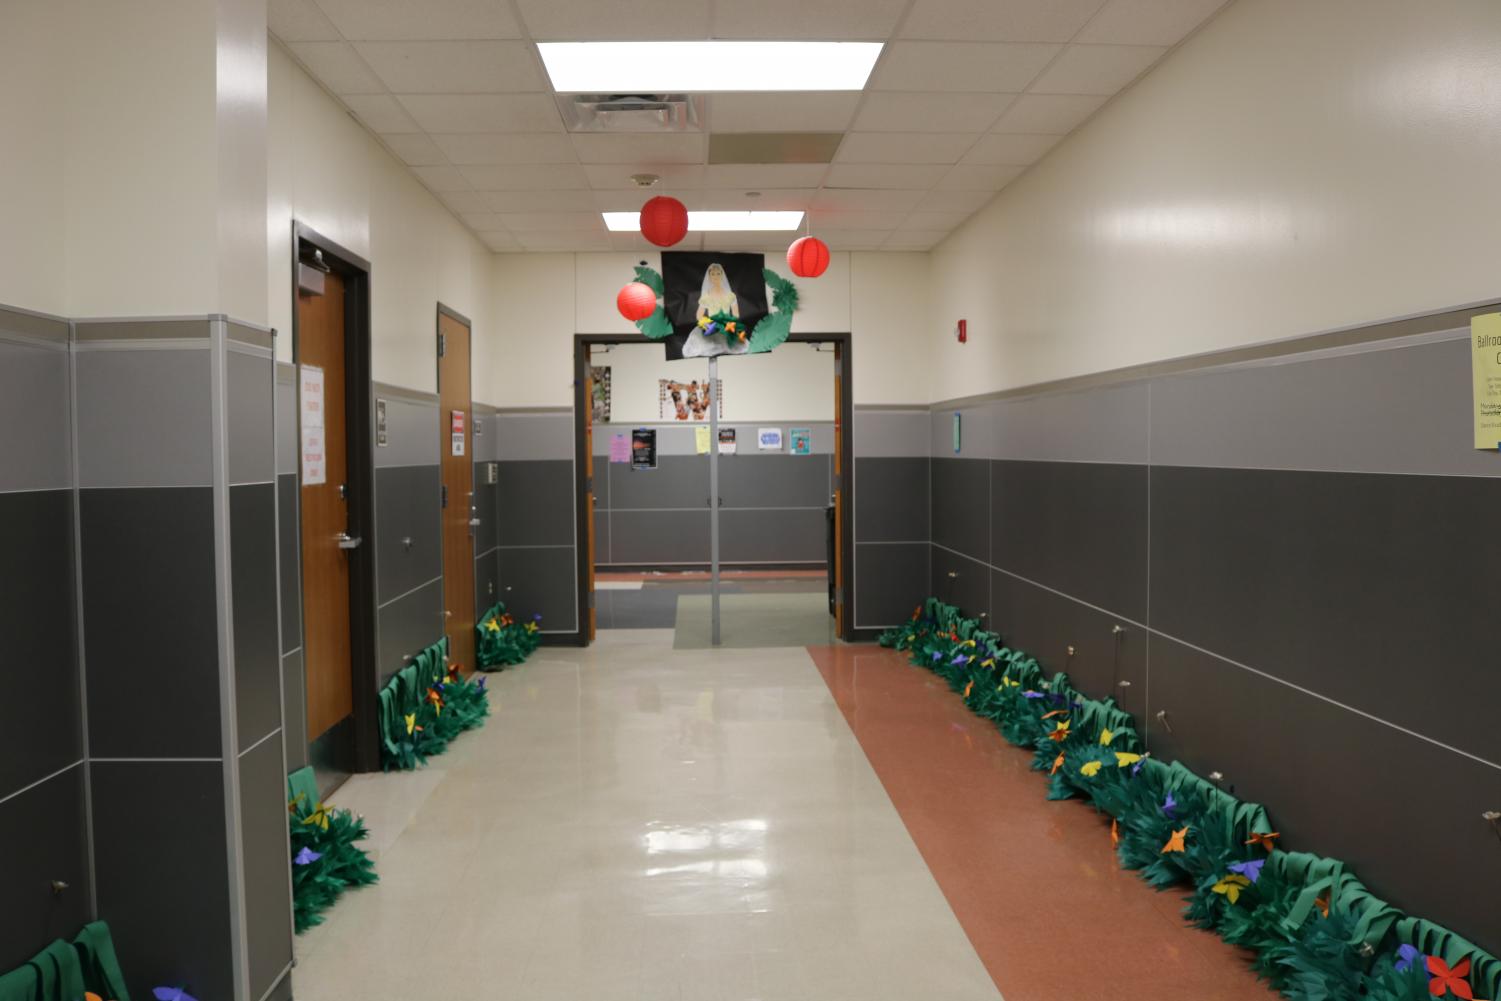 Student Organizations Decorate Hallways for Homecoming – Westwood Horizon